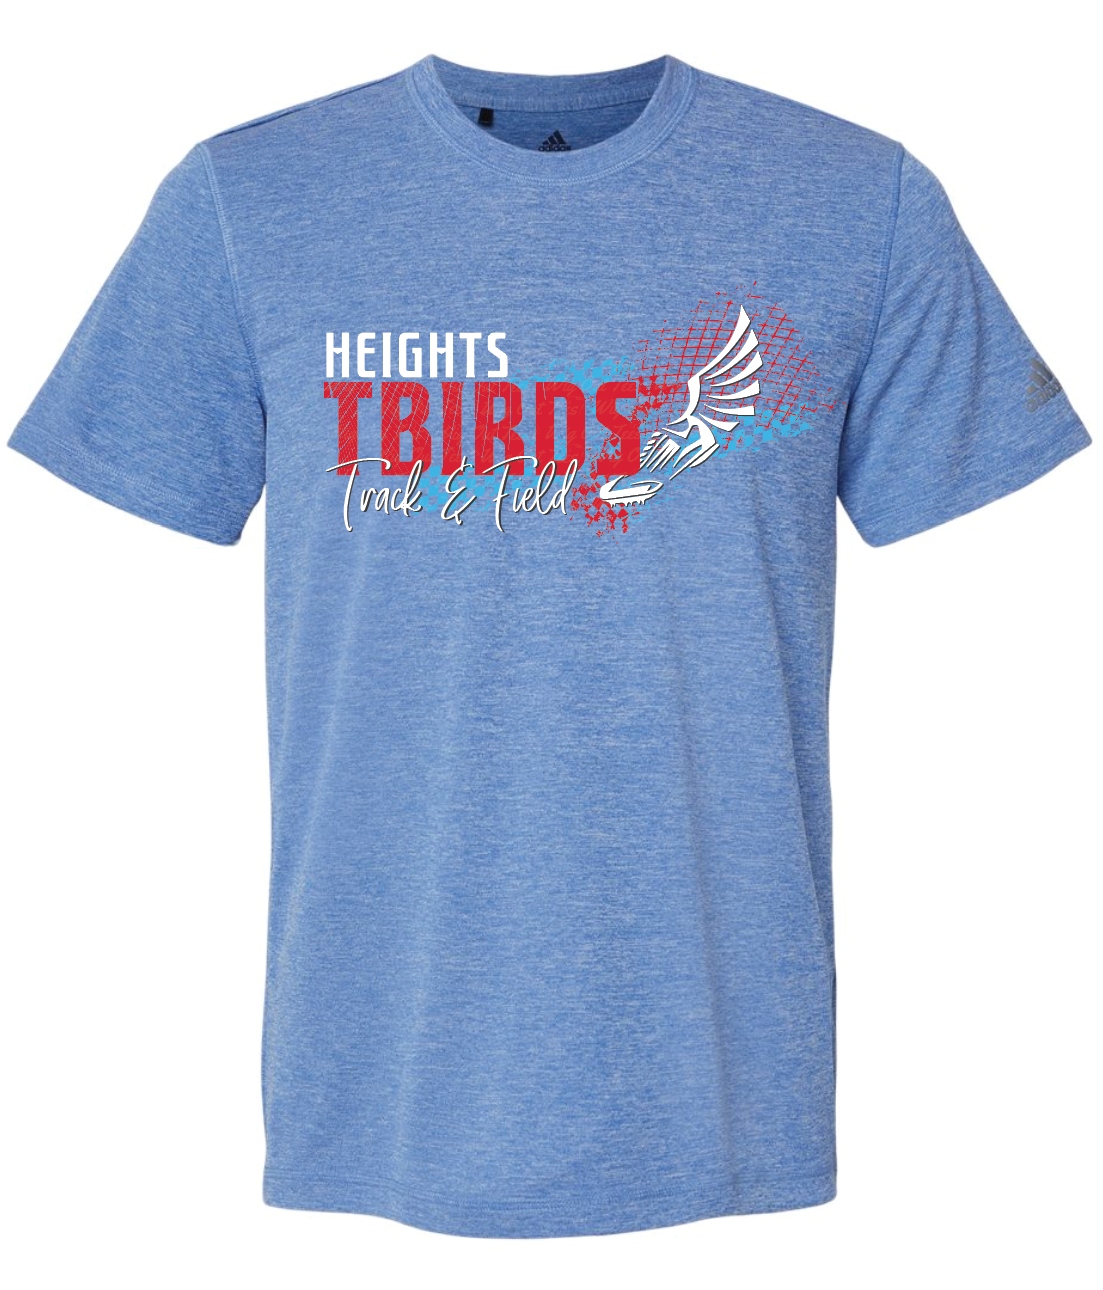 Tbirds Track & Field Adidas Sports T-shirt